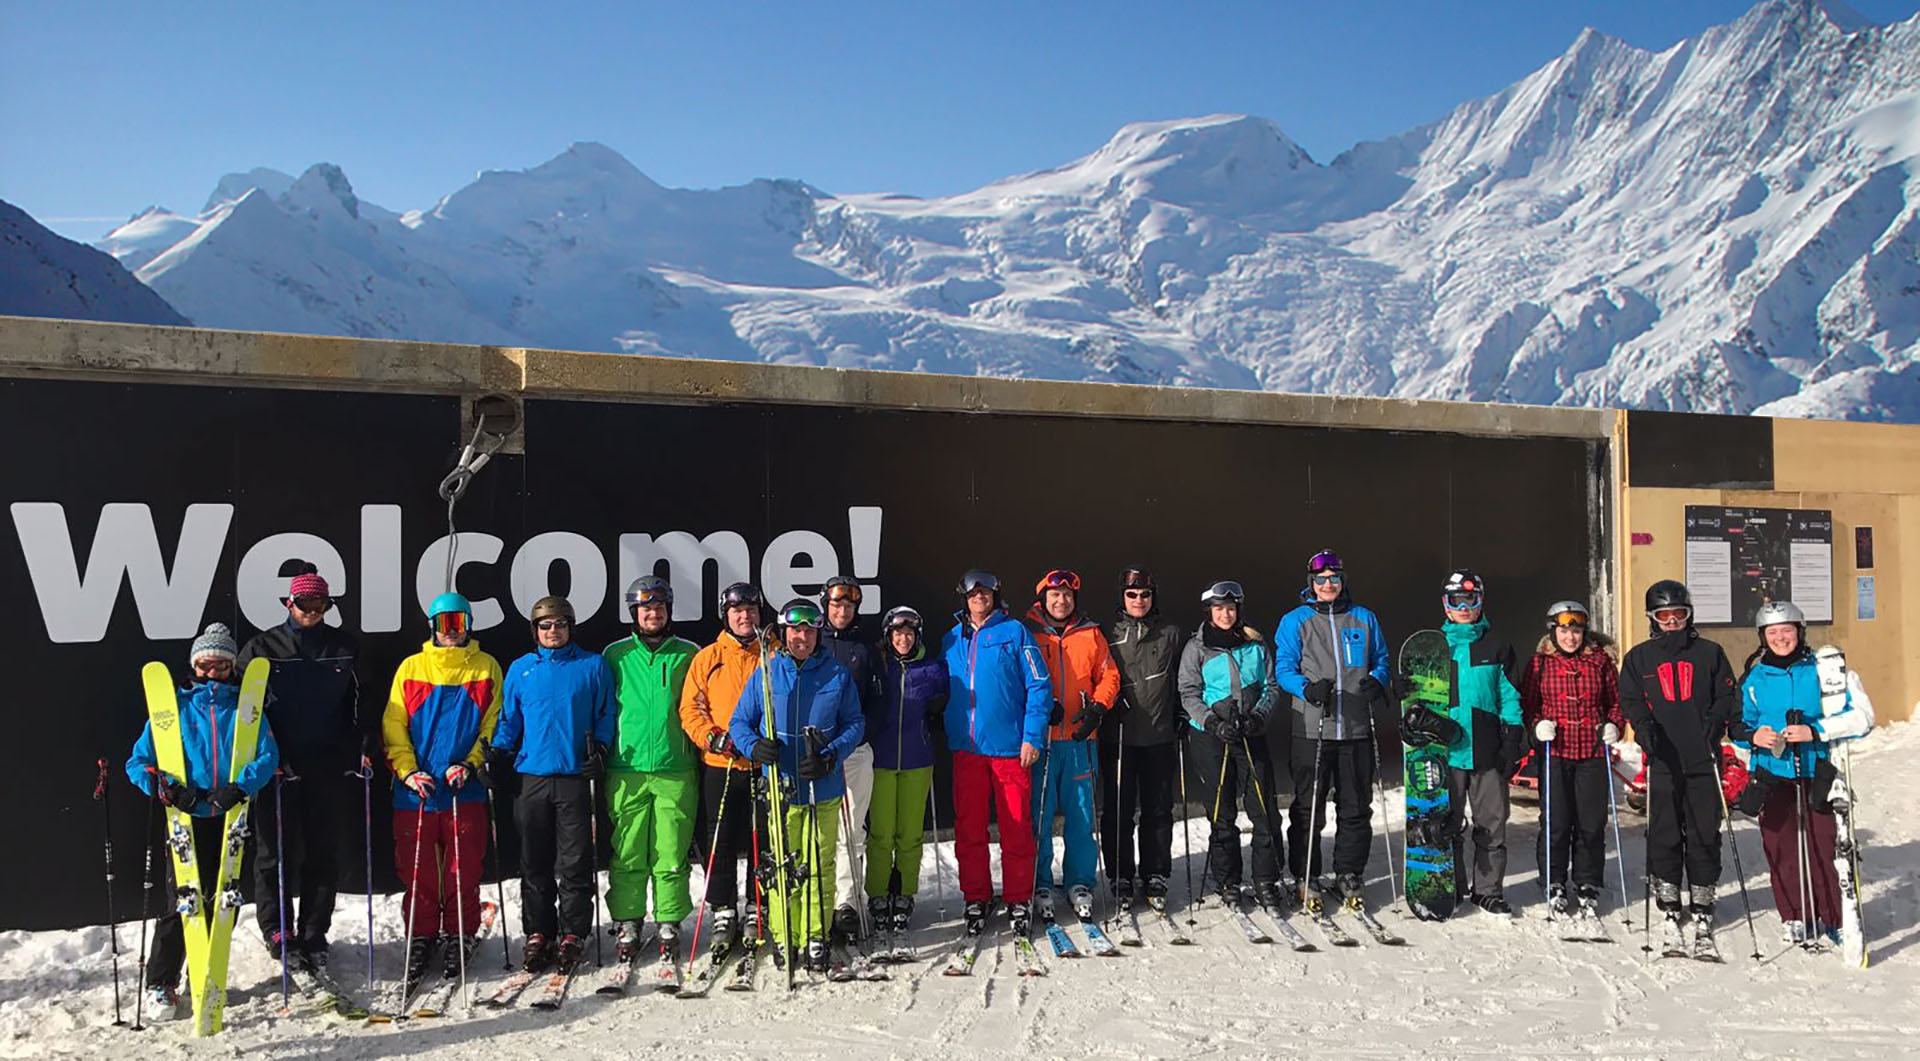 PM ski group